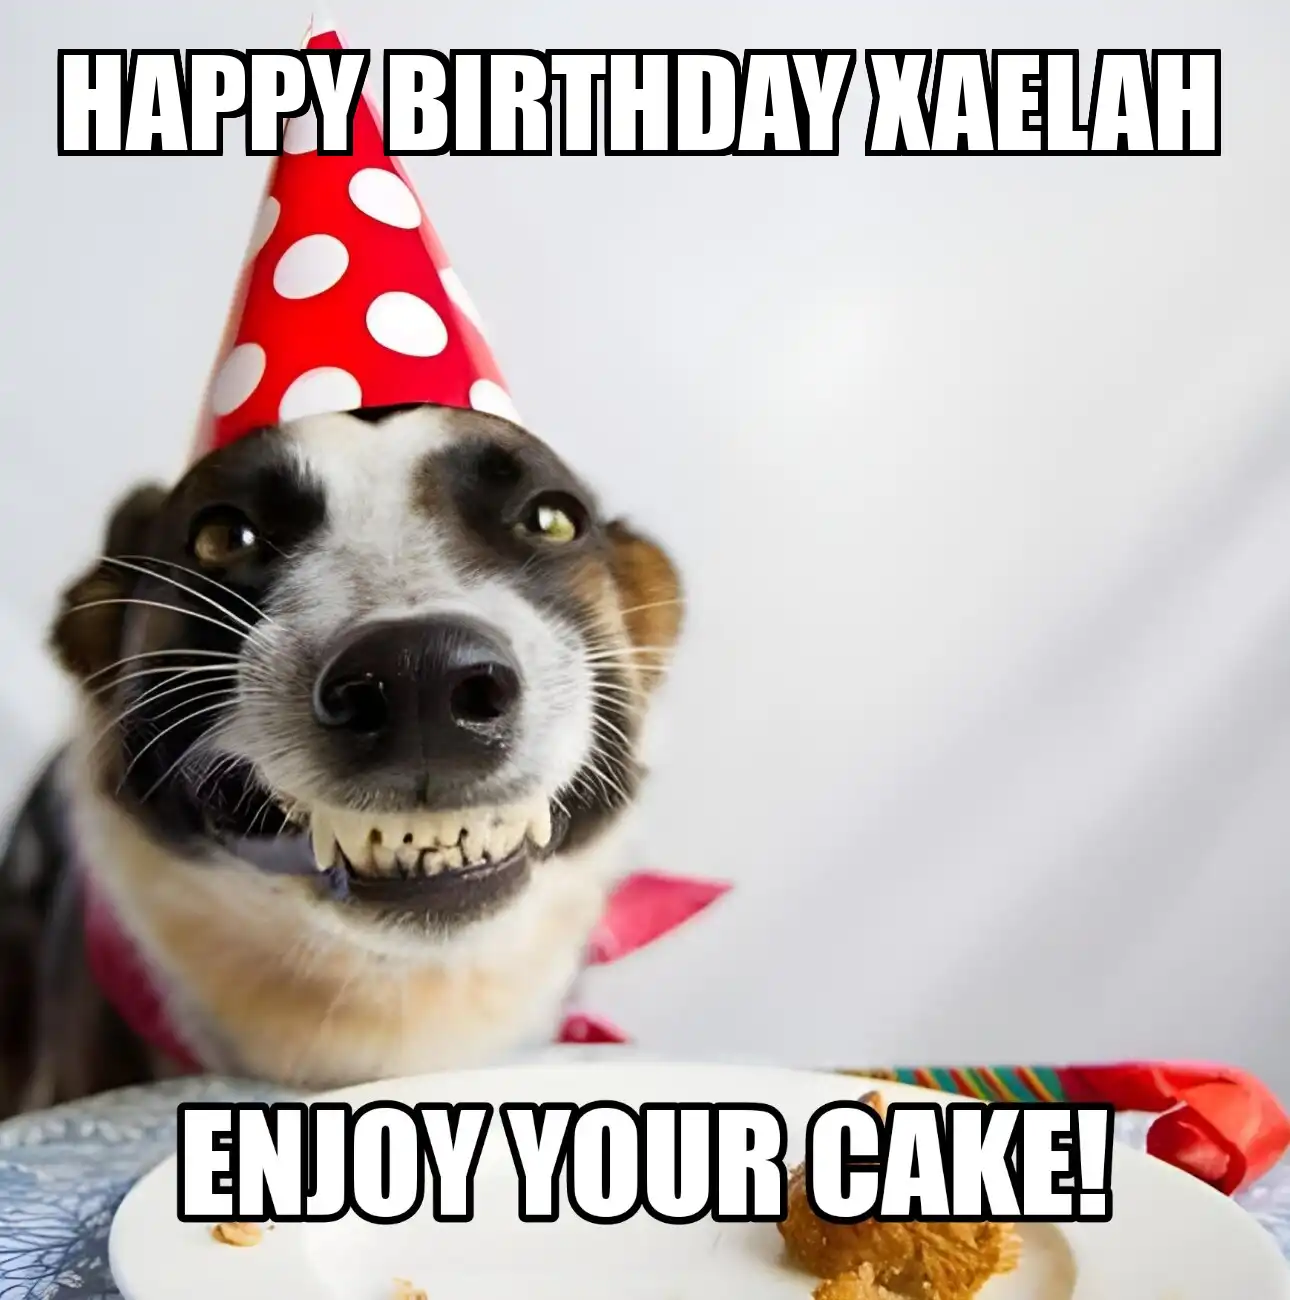 Happy Birthday Xaelah Enjoy Your Cake Dog Meme